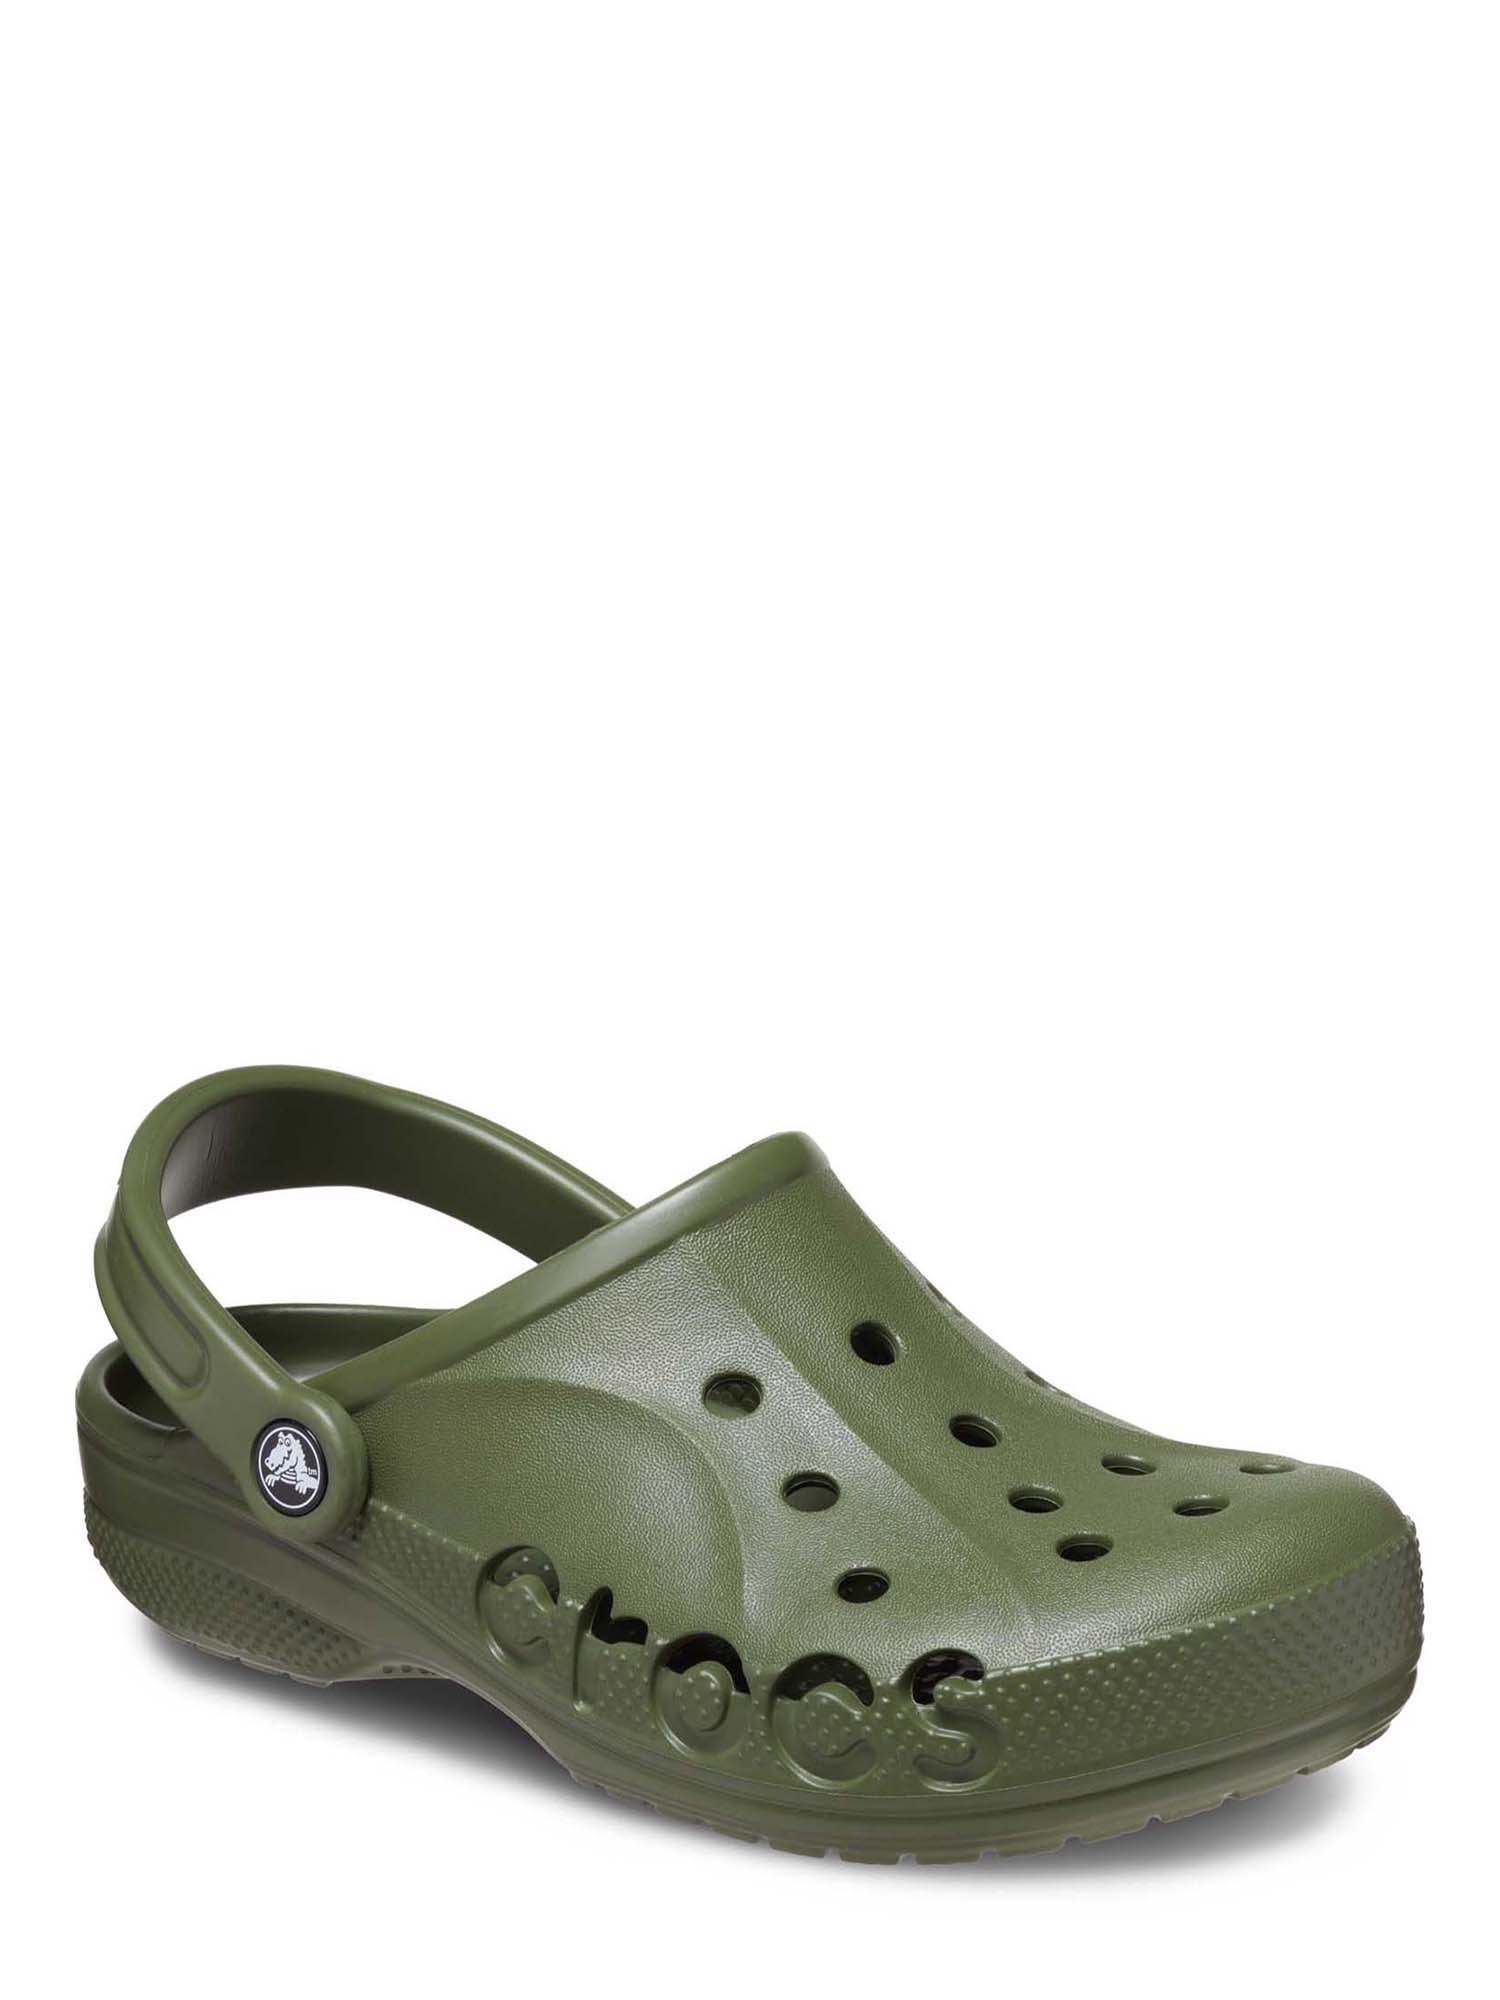 Crocs Unisex Baya Clog Sandals - image 1 of 6